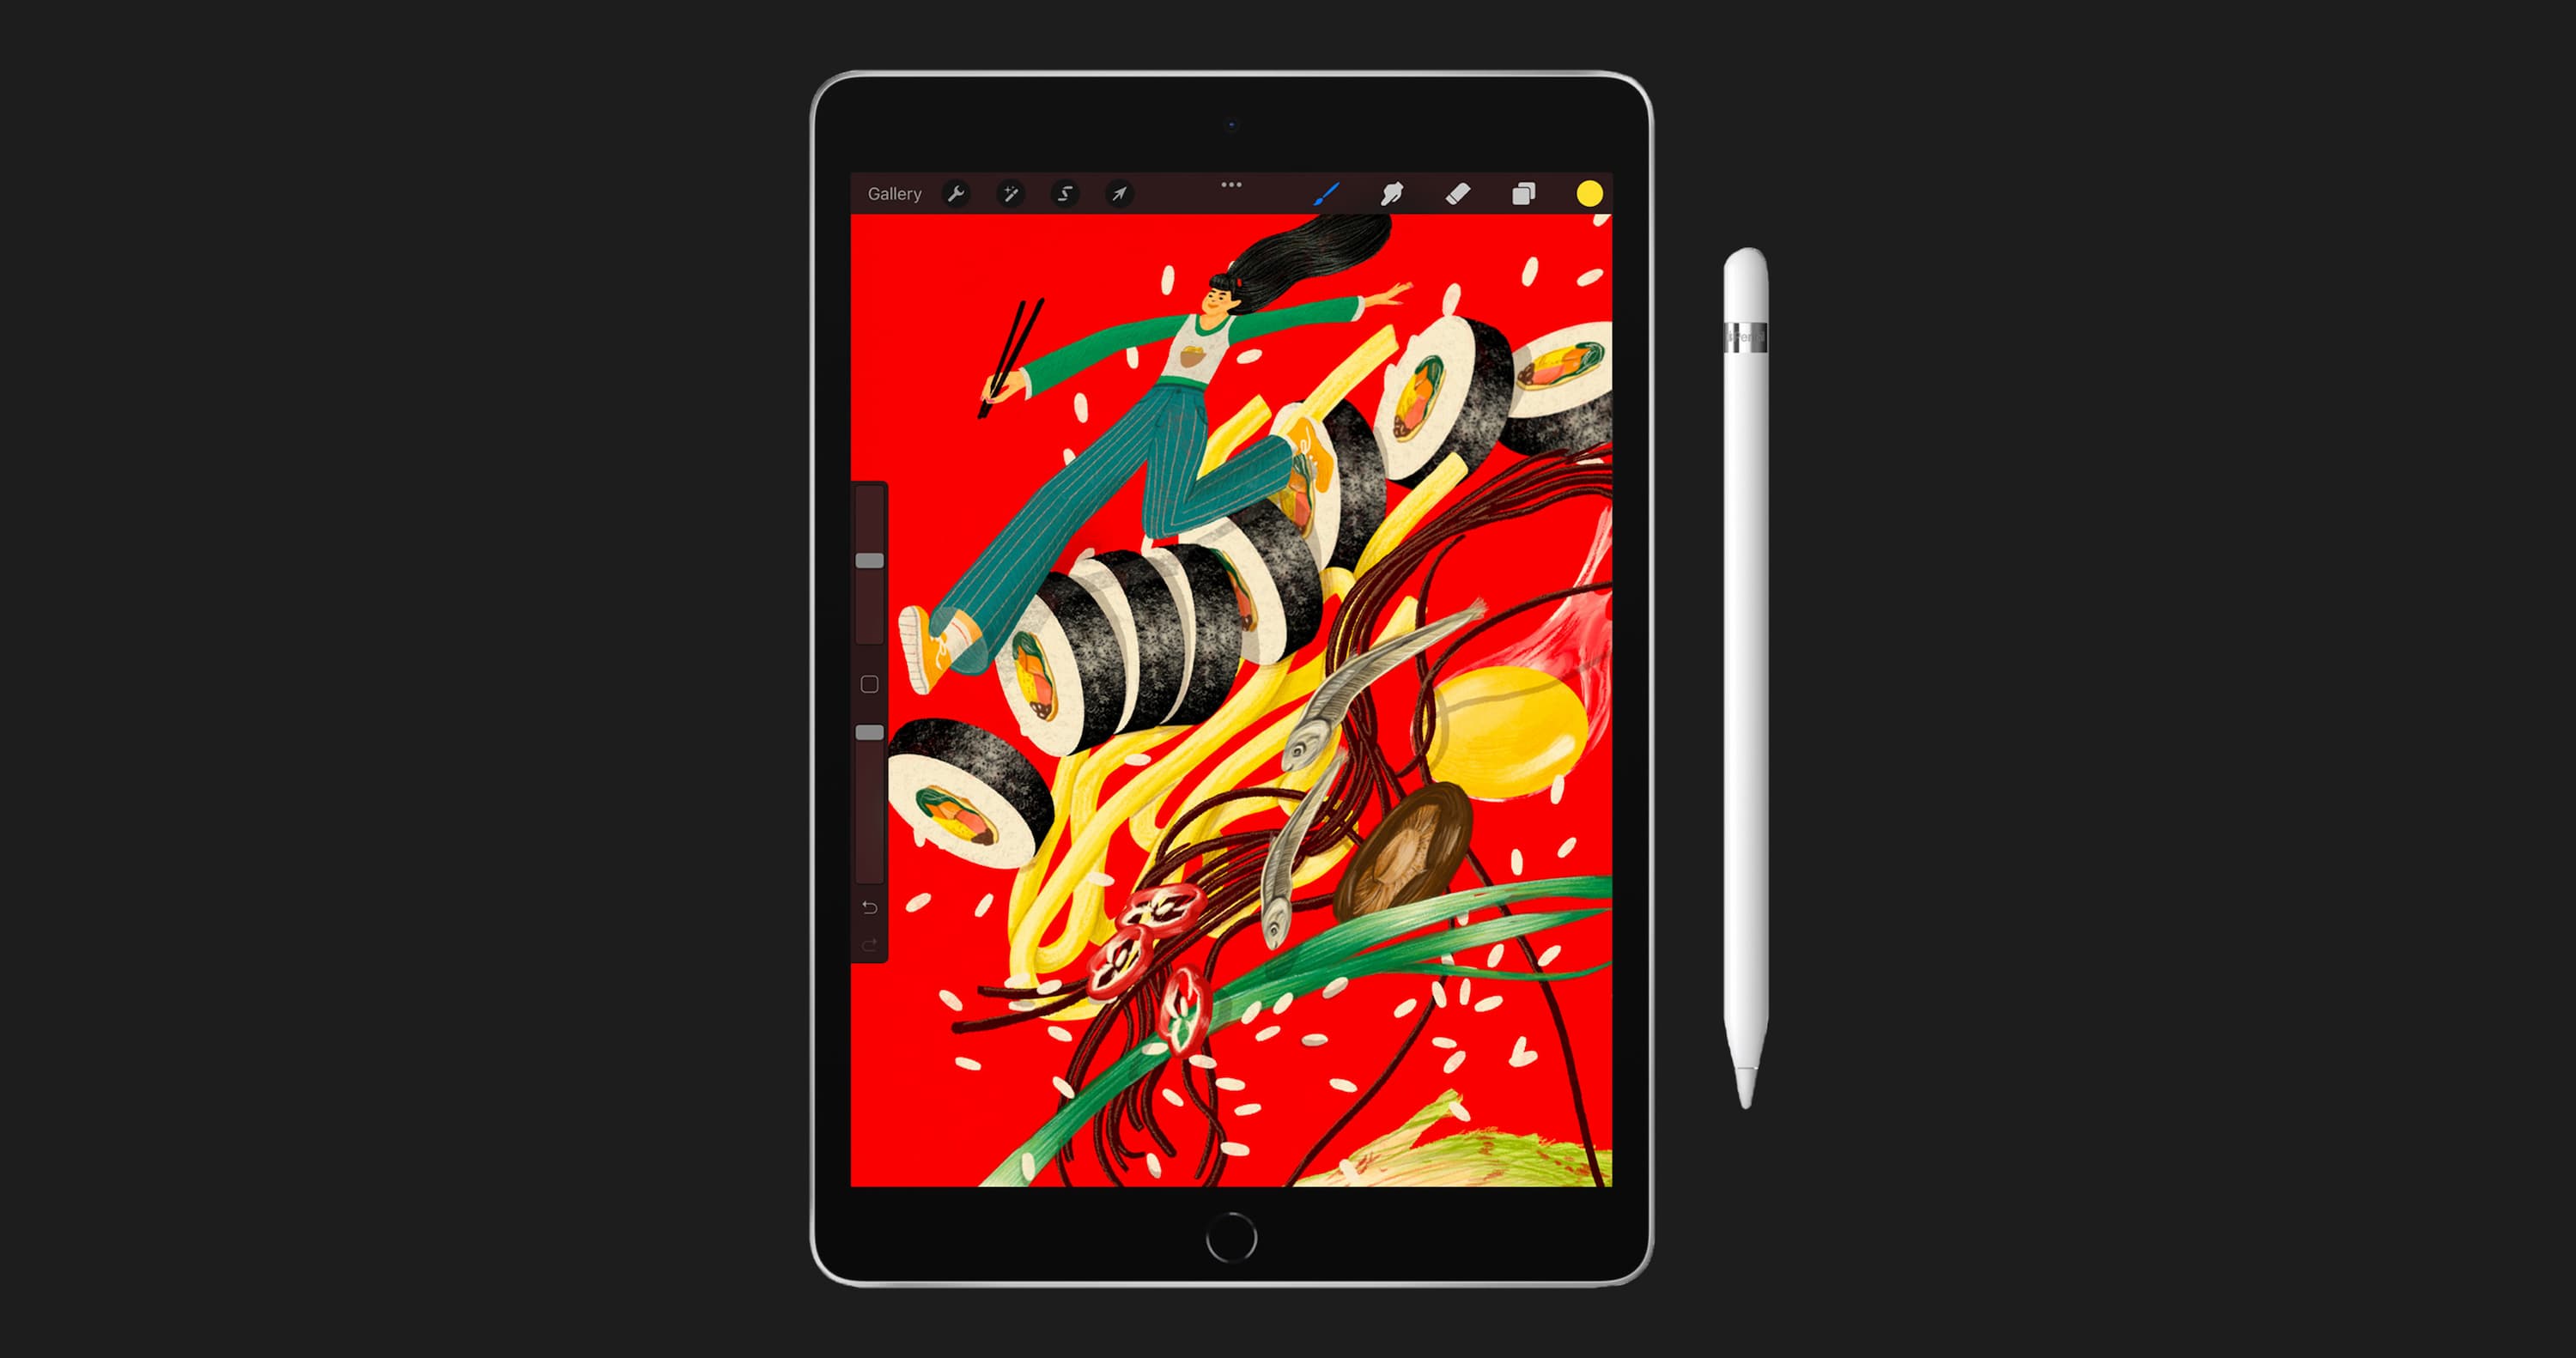 Планшет Apple iPad 10.2 32GB Gold (MYLC2) 2020